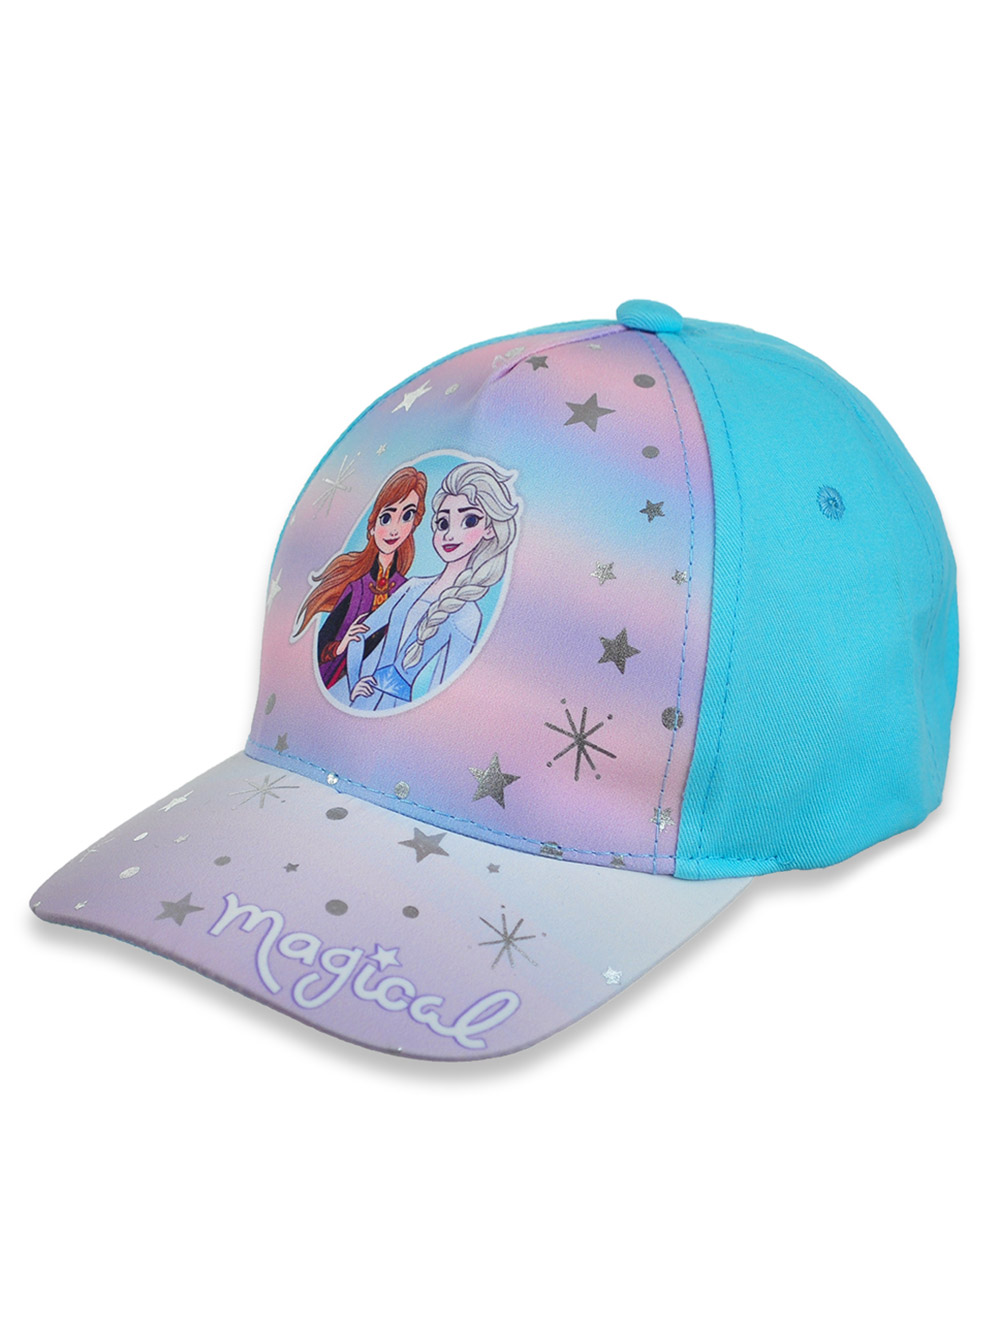 Disney Frozen Baseball Cap Pink Hat Elsa & Anna New